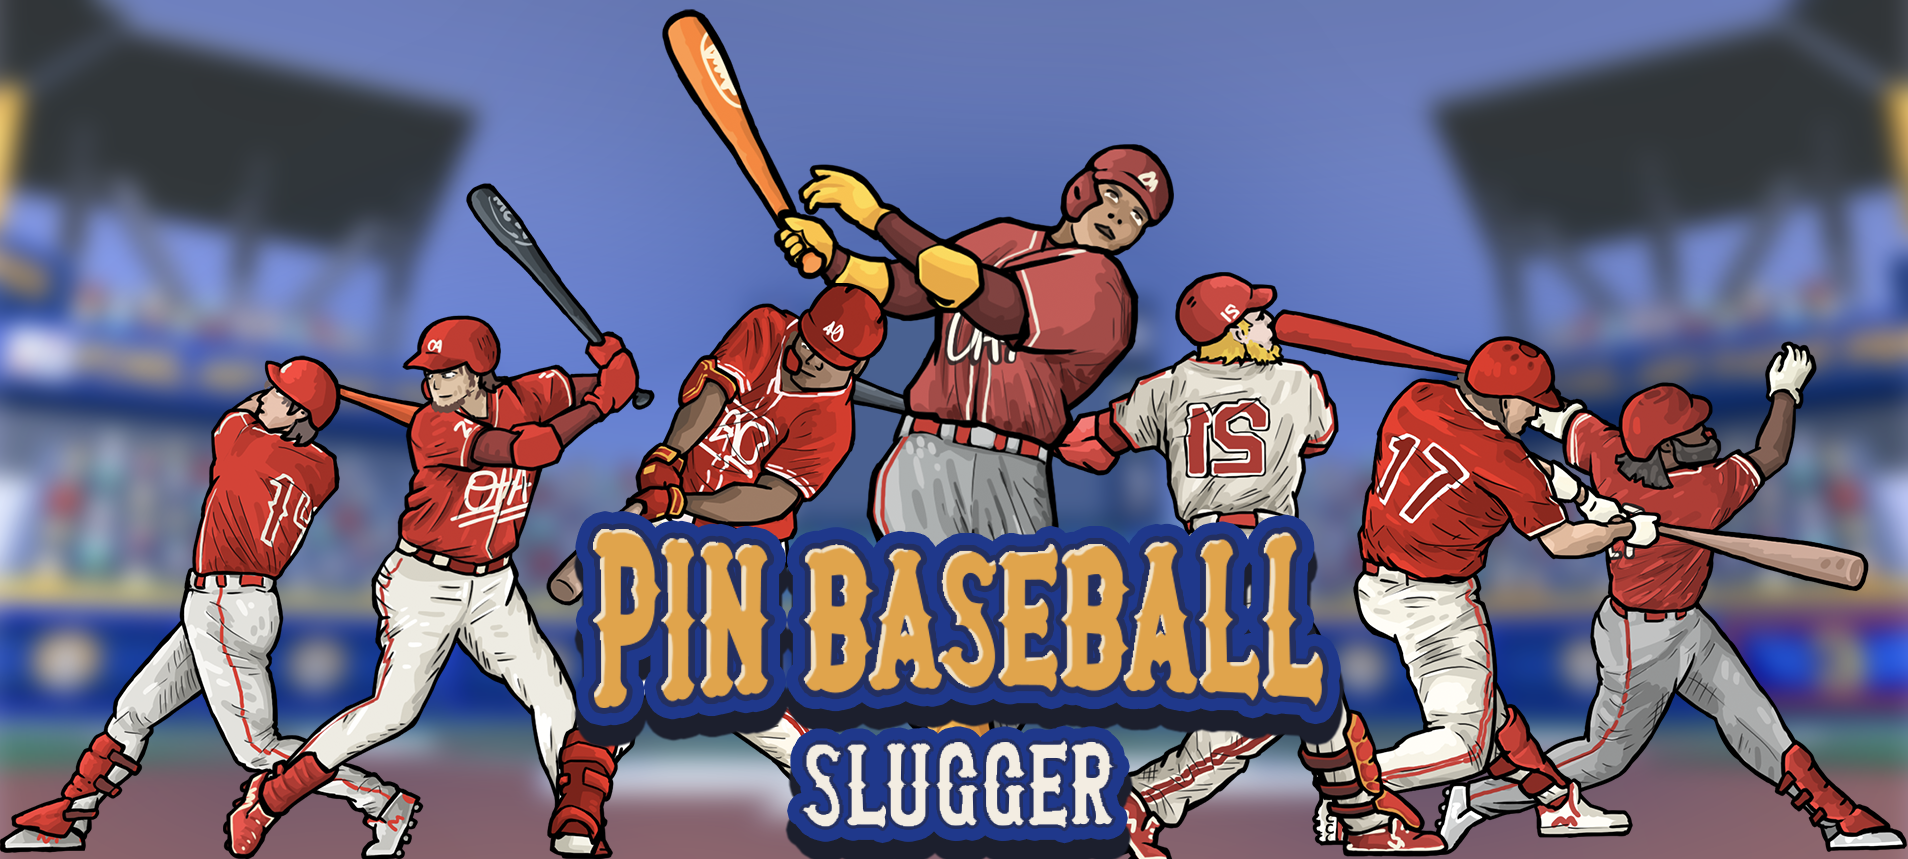 Screenshot 1 of Pin baseball games - slugger 2.0.0